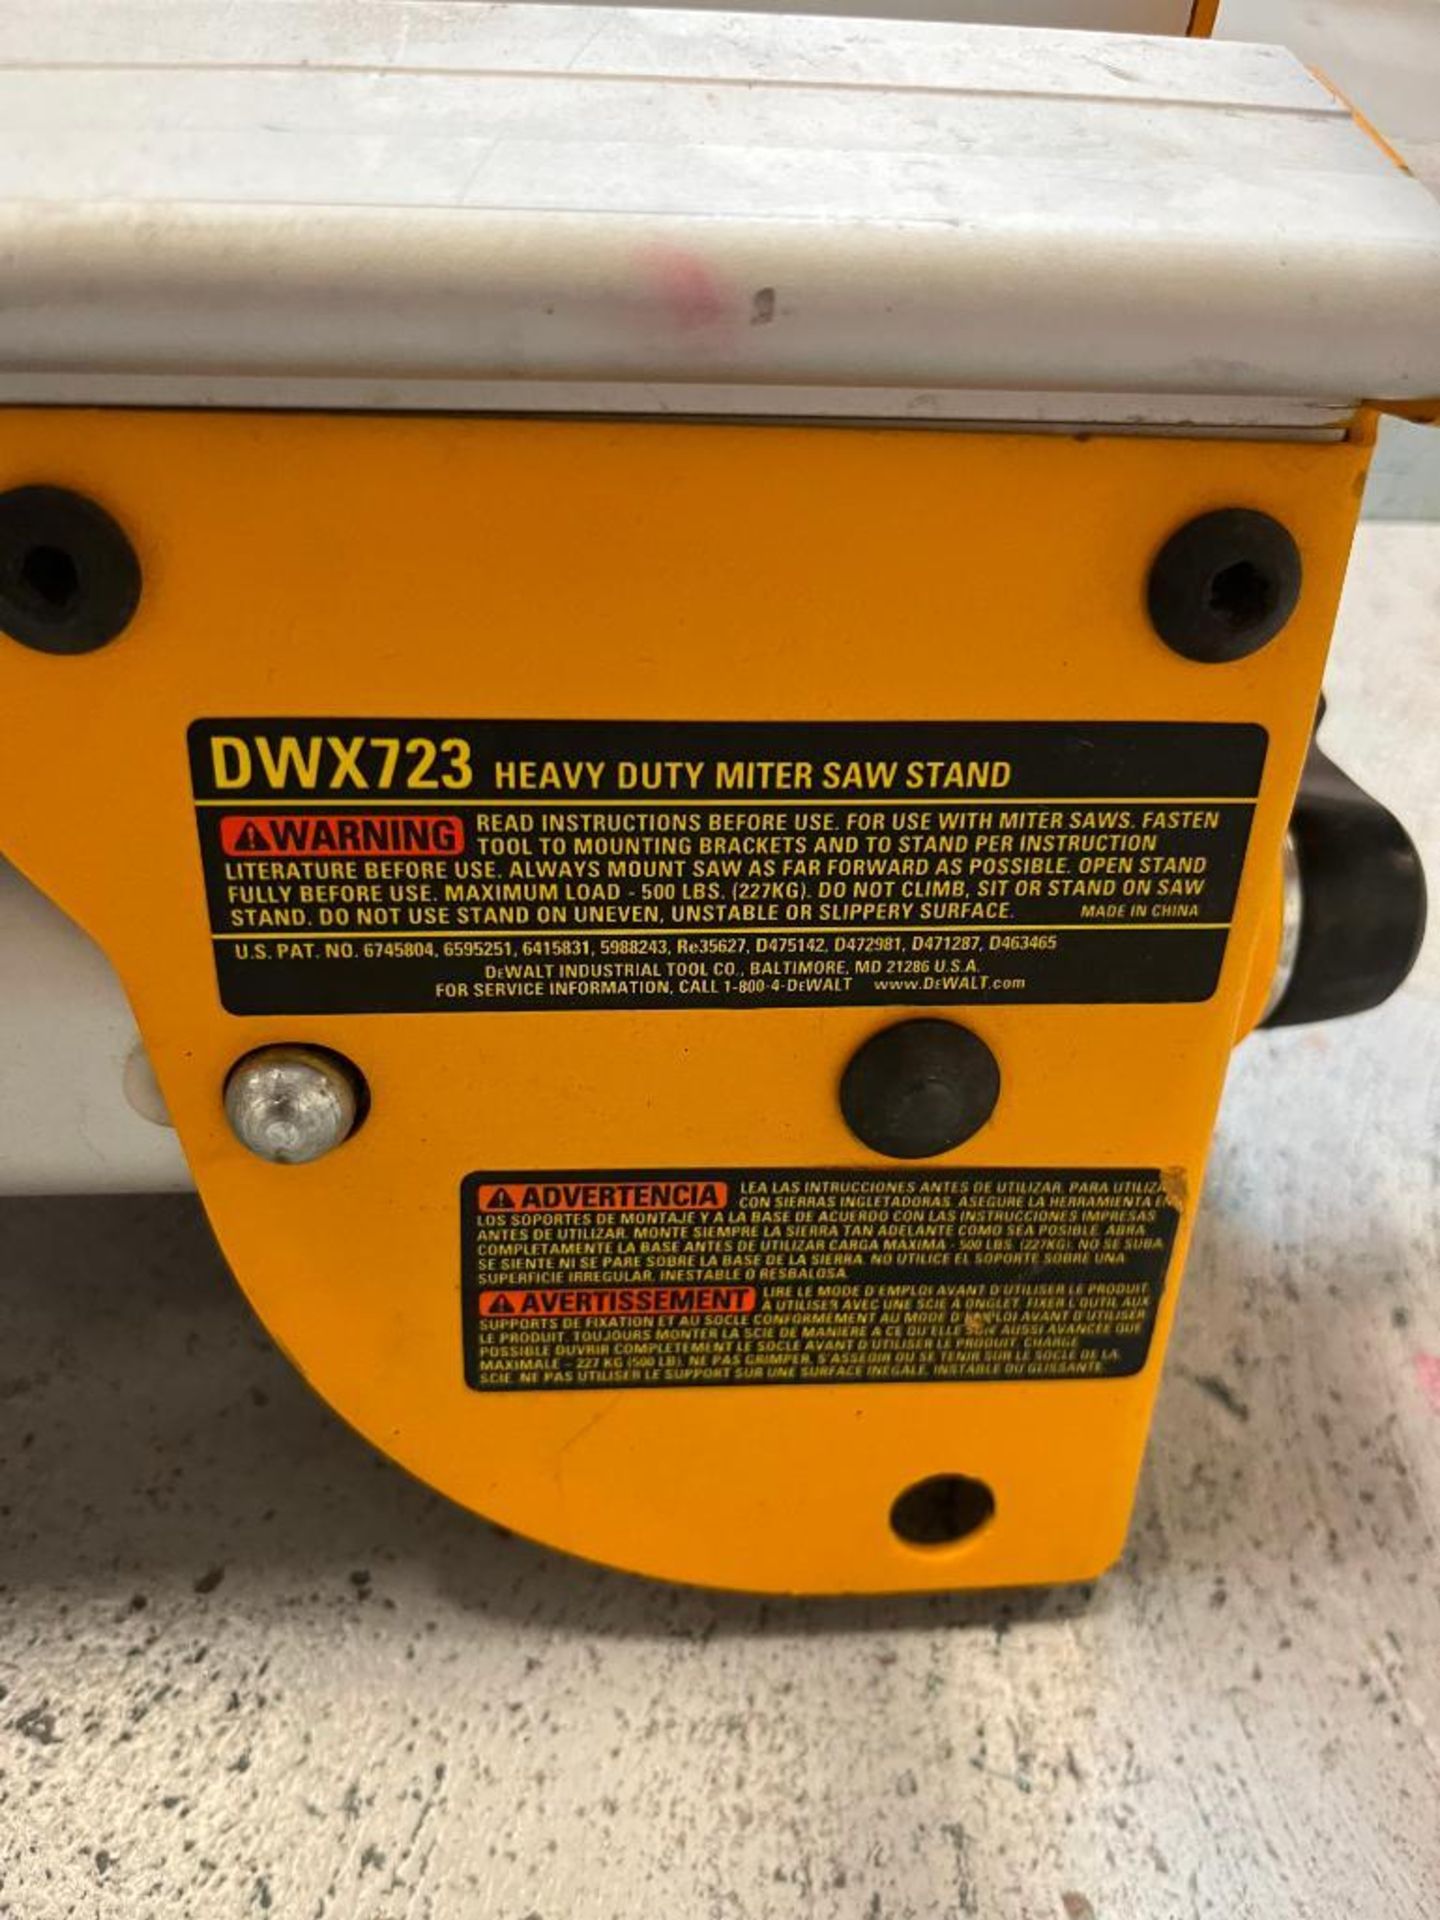 Dewalt 12" Compound Miter Saw, Model DW715, Heavy Duty Miter Saw Stand DWX723 - Image 4 of 4